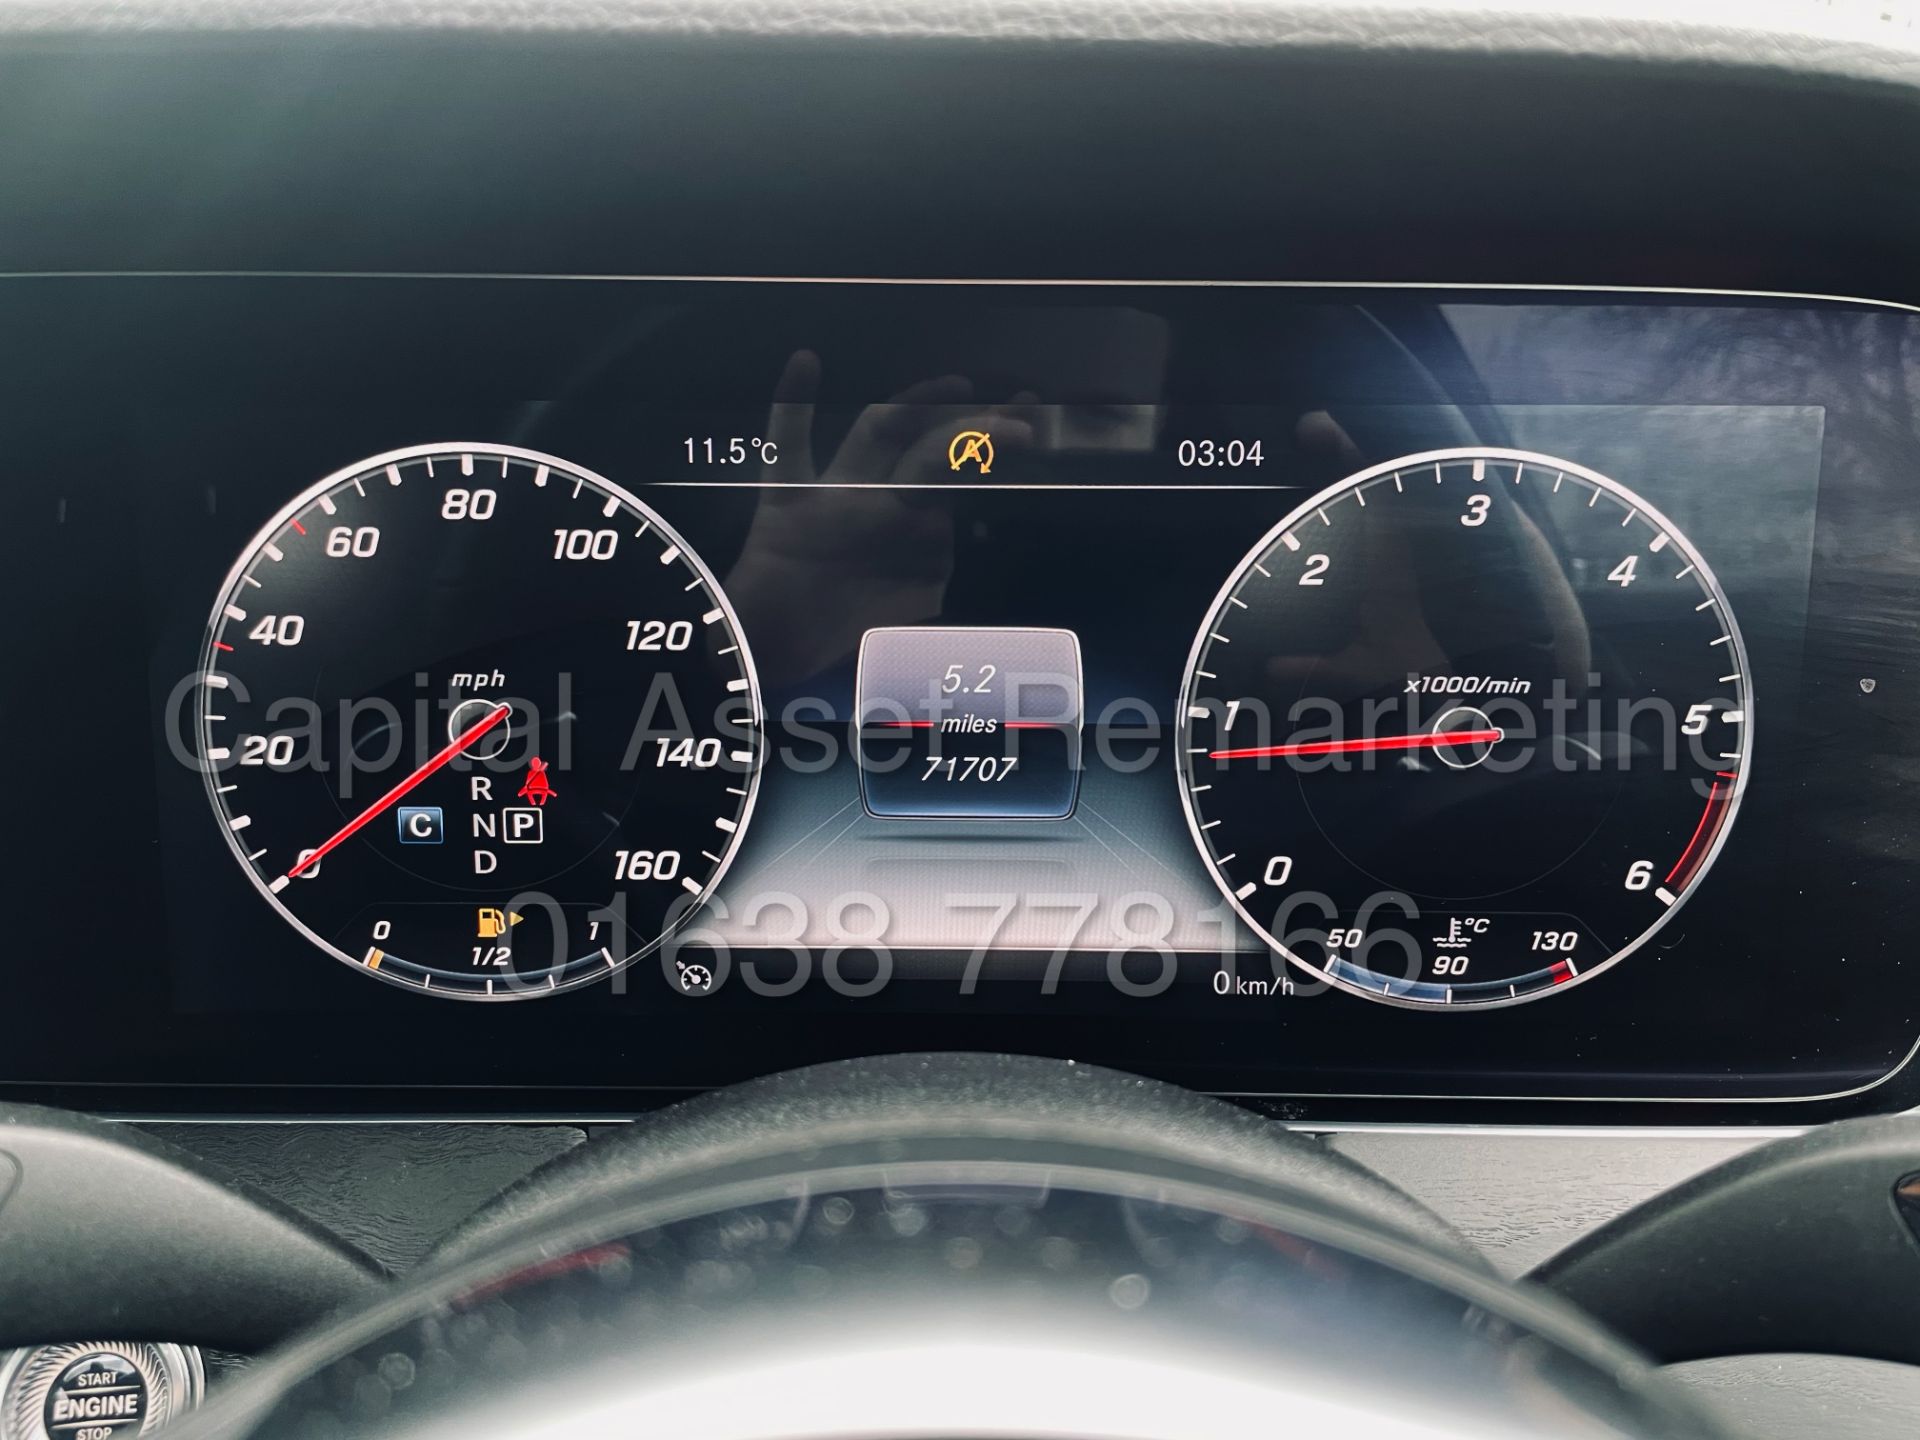 MERCEDES-BENZ E220d *AMG LINE* SALOON (2019 - EURO 6) '9G TRONIC AUTO - LEATHER- SAT NAV' *TOP SPEC* - Image 51 of 51